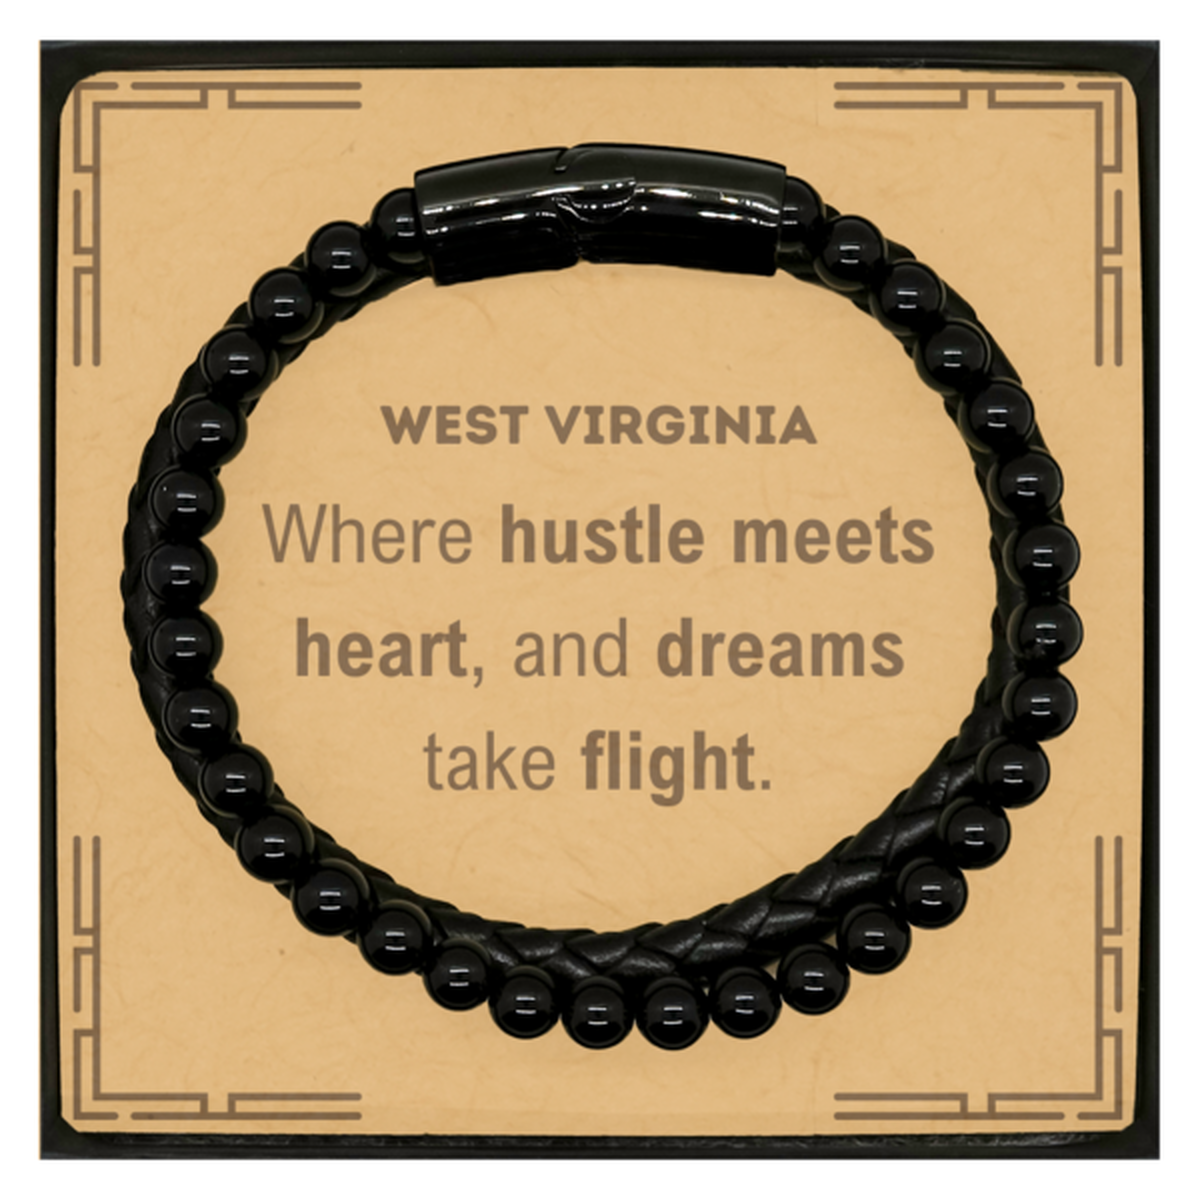 West Virginia: Where hustle meets heart, and dreams take flight, West Virginia Card Gifts, Proud West Virginia Christmas Birthday West Virginia Stone Leather Bracelets, West Virginia State People, Men, Women, Friends